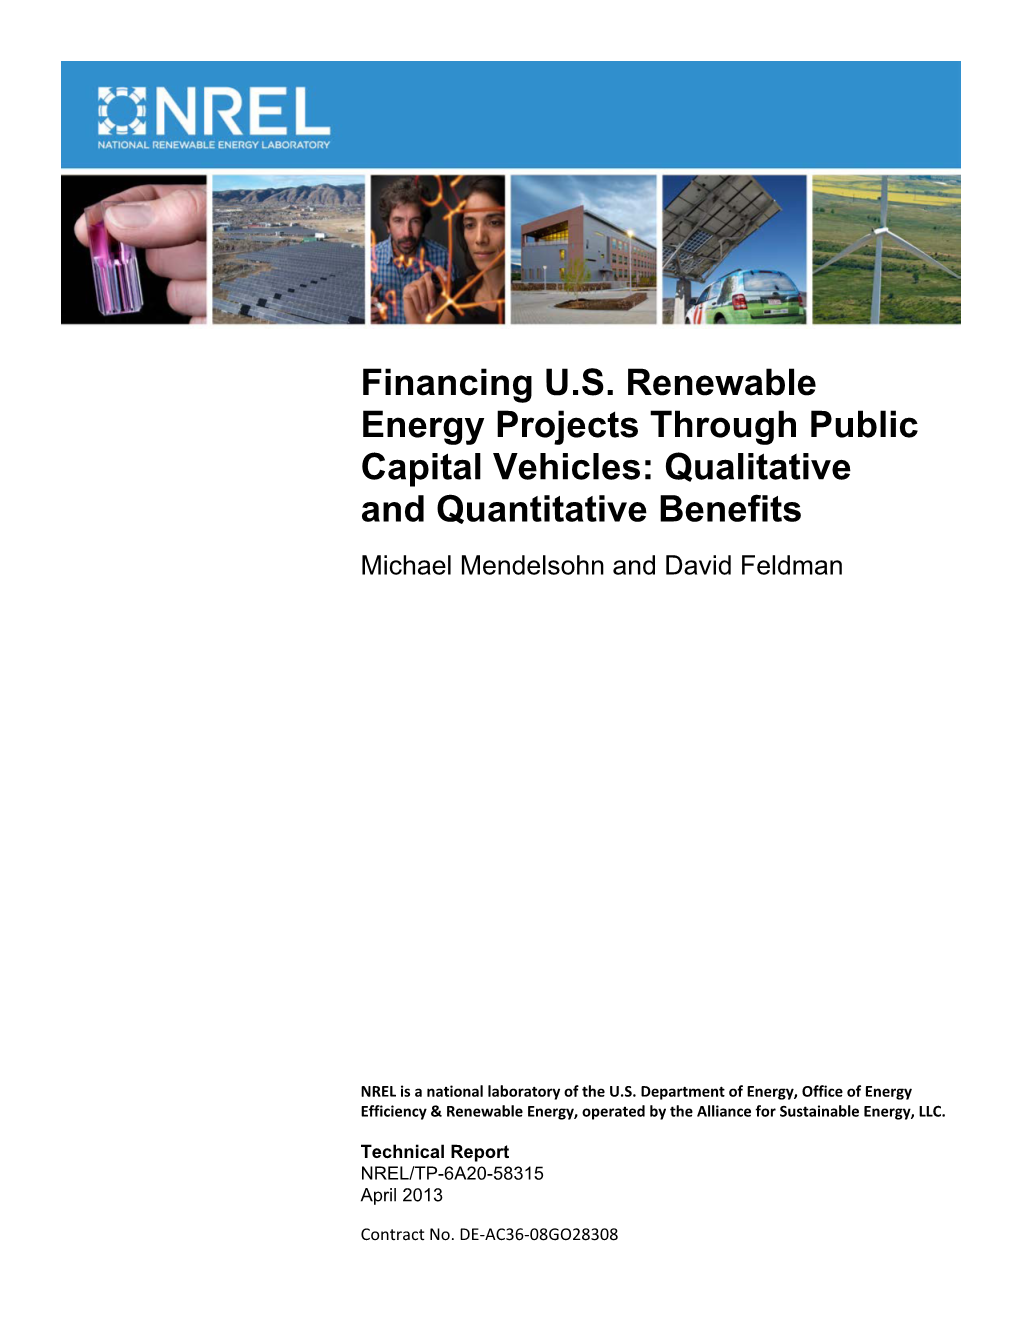 Financing U.S. Renewable Energy Projects Through Public Capital Vehicles: Qualitative and Quantitative Benefits Michael Mendelsohn and David Feldman